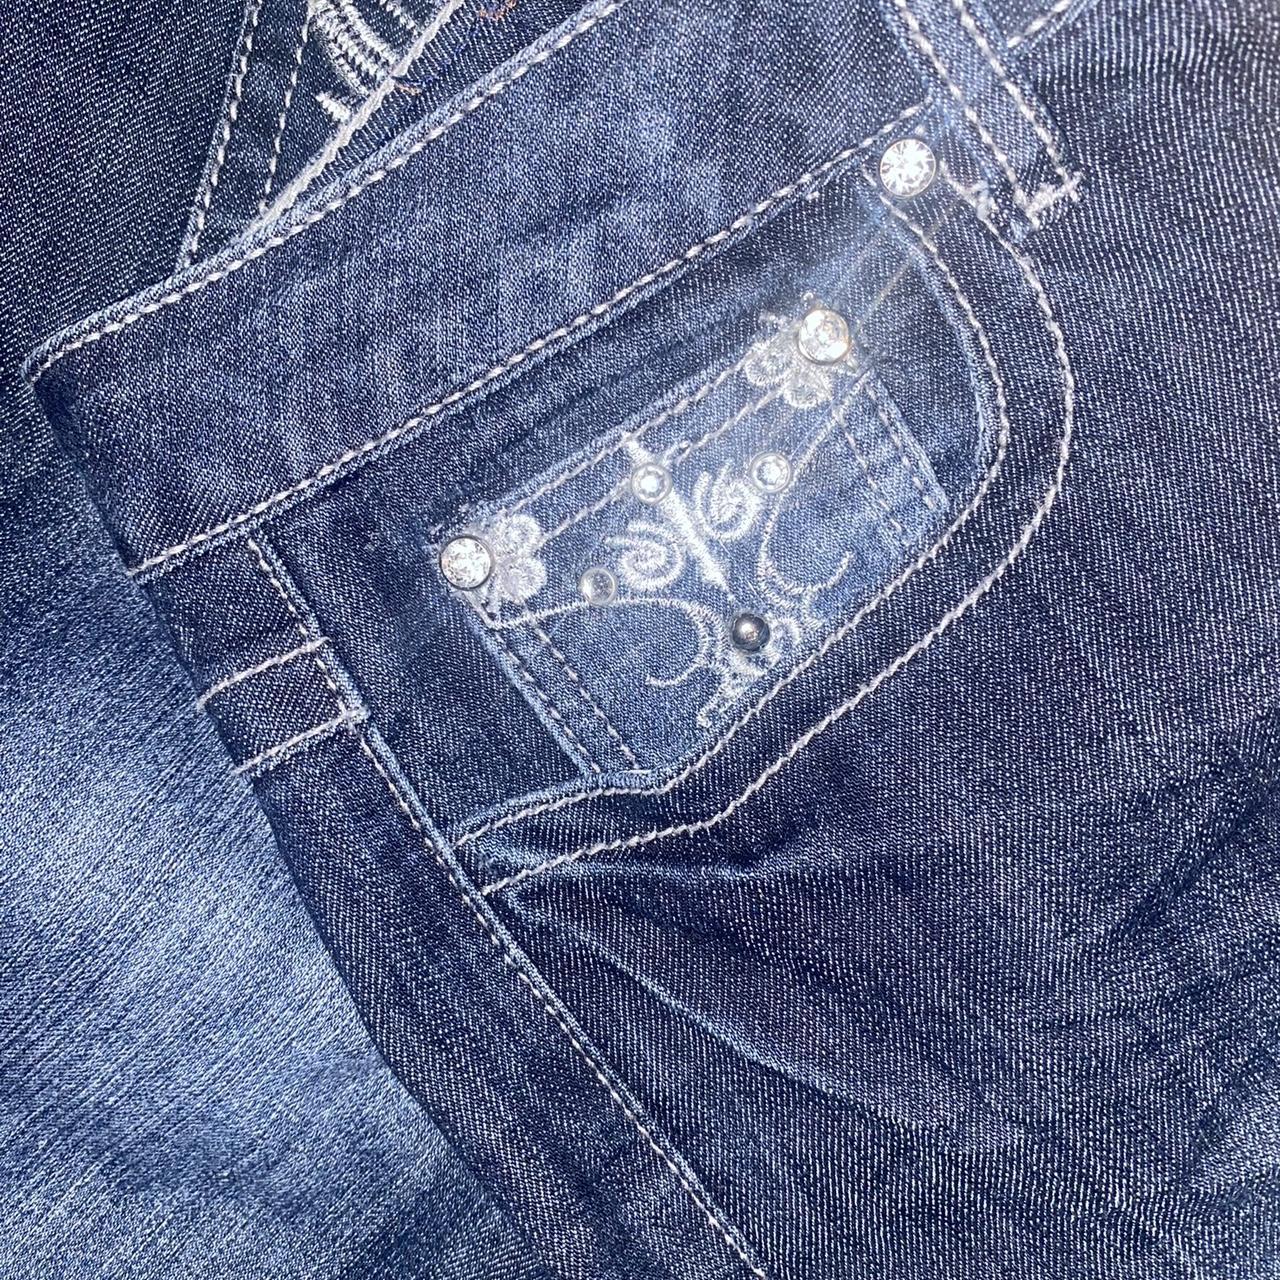 Earl Jeans Juniors' 13 Mid Rise Boot Cut Embellished - Depop